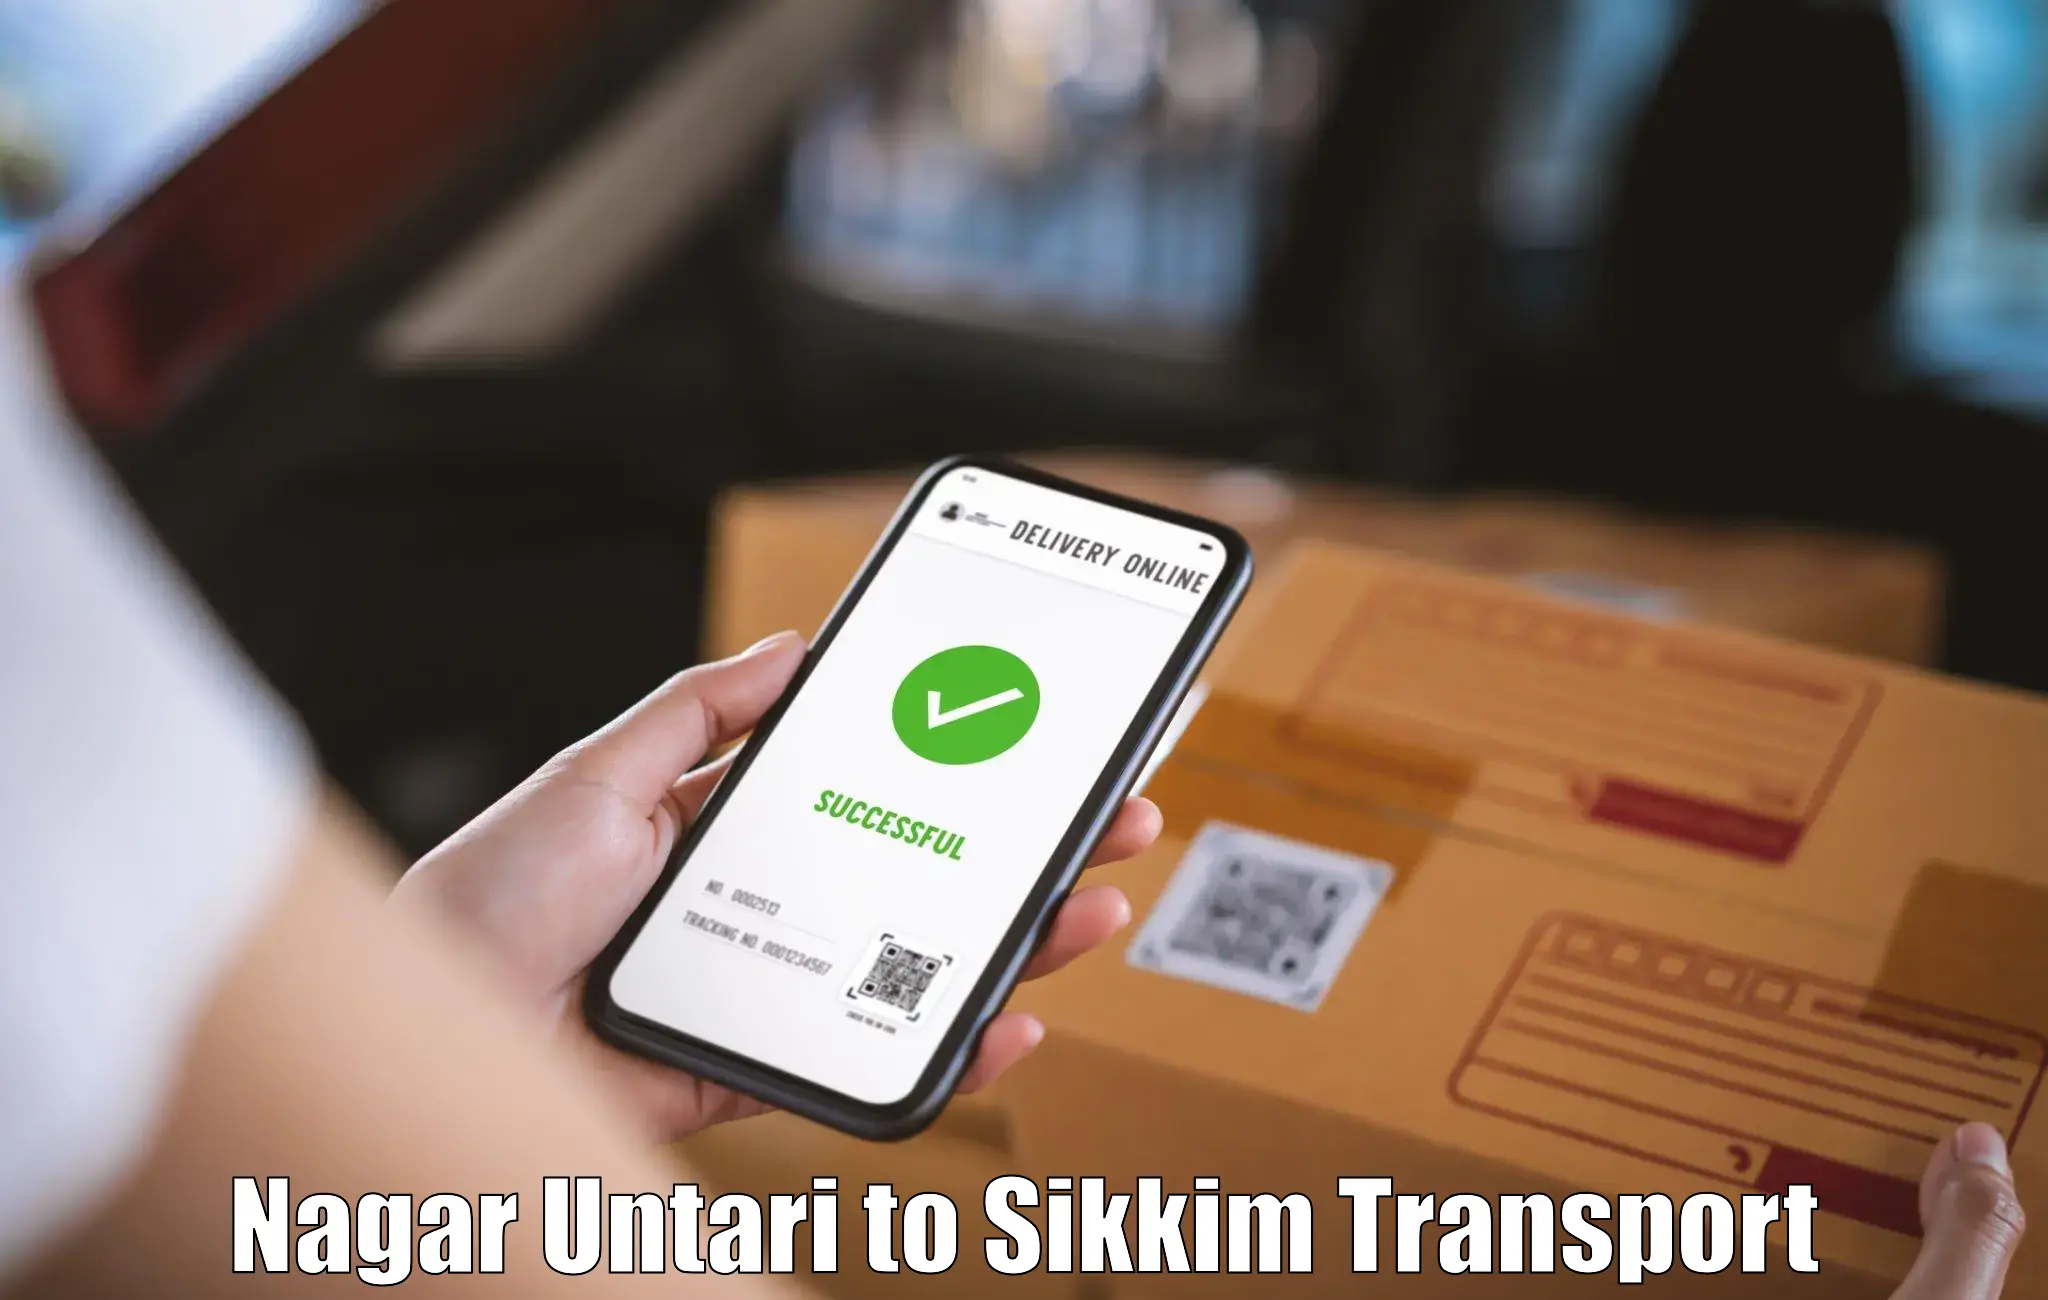 International cargo transportation services Nagar Untari to Jorethang